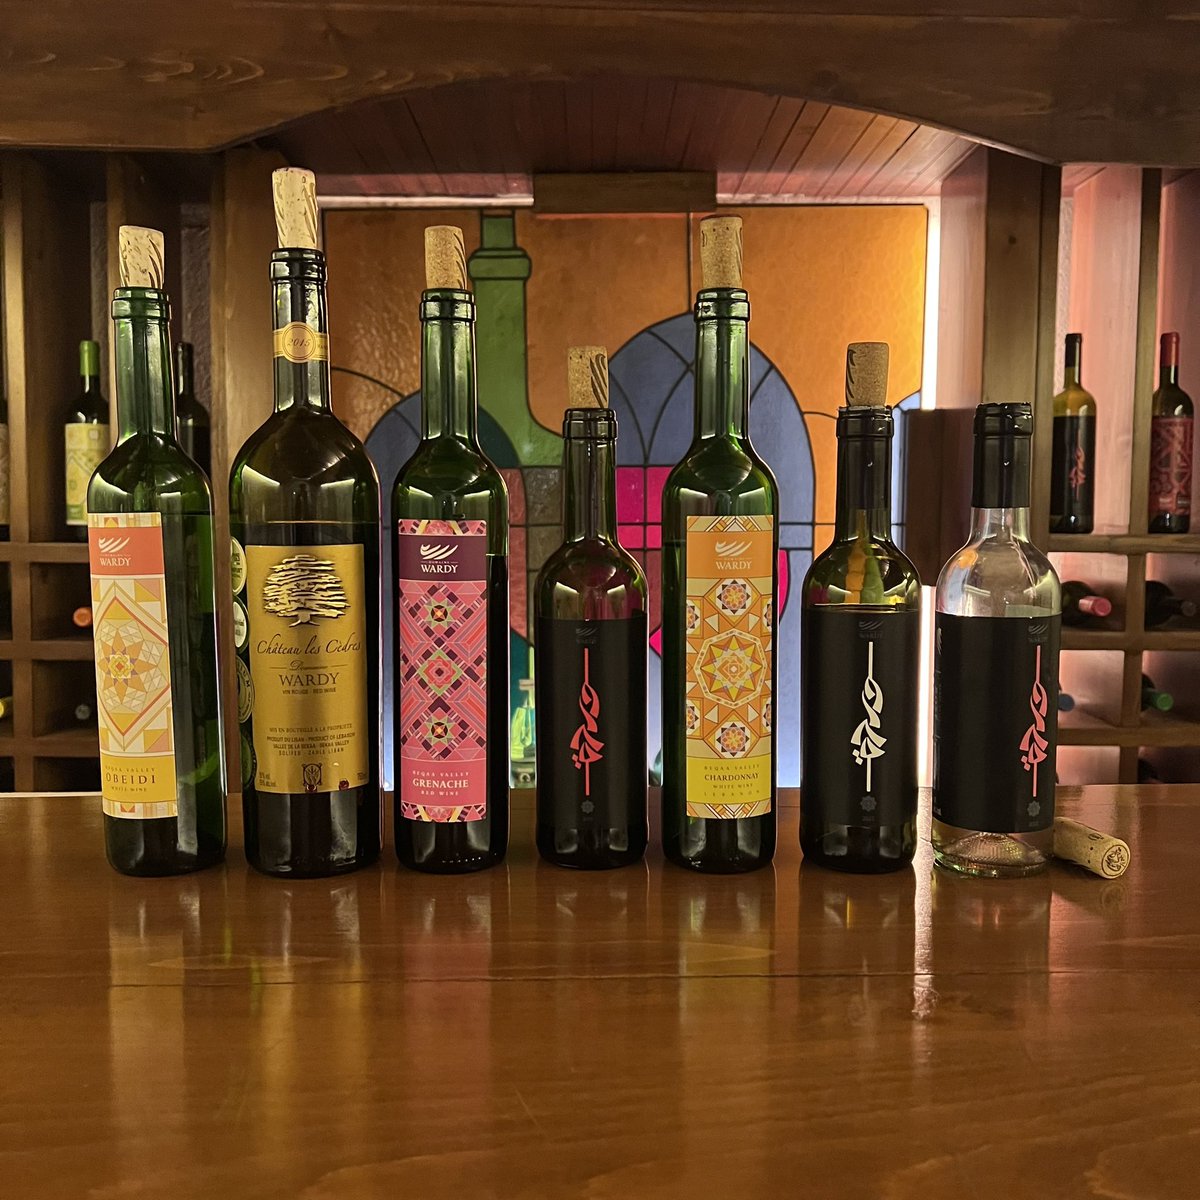 Always a pleasure to welcome guests for a wine tasting at the cellar . #wine #redwine #rosewine #whitewine #winetasting #cellar #sustainable #vegan #awardwinning #finewine #premiumwine #lebanesewine #lebanesewineries #winesoflebanon #lebanon #familybusiness @charly_kiwan